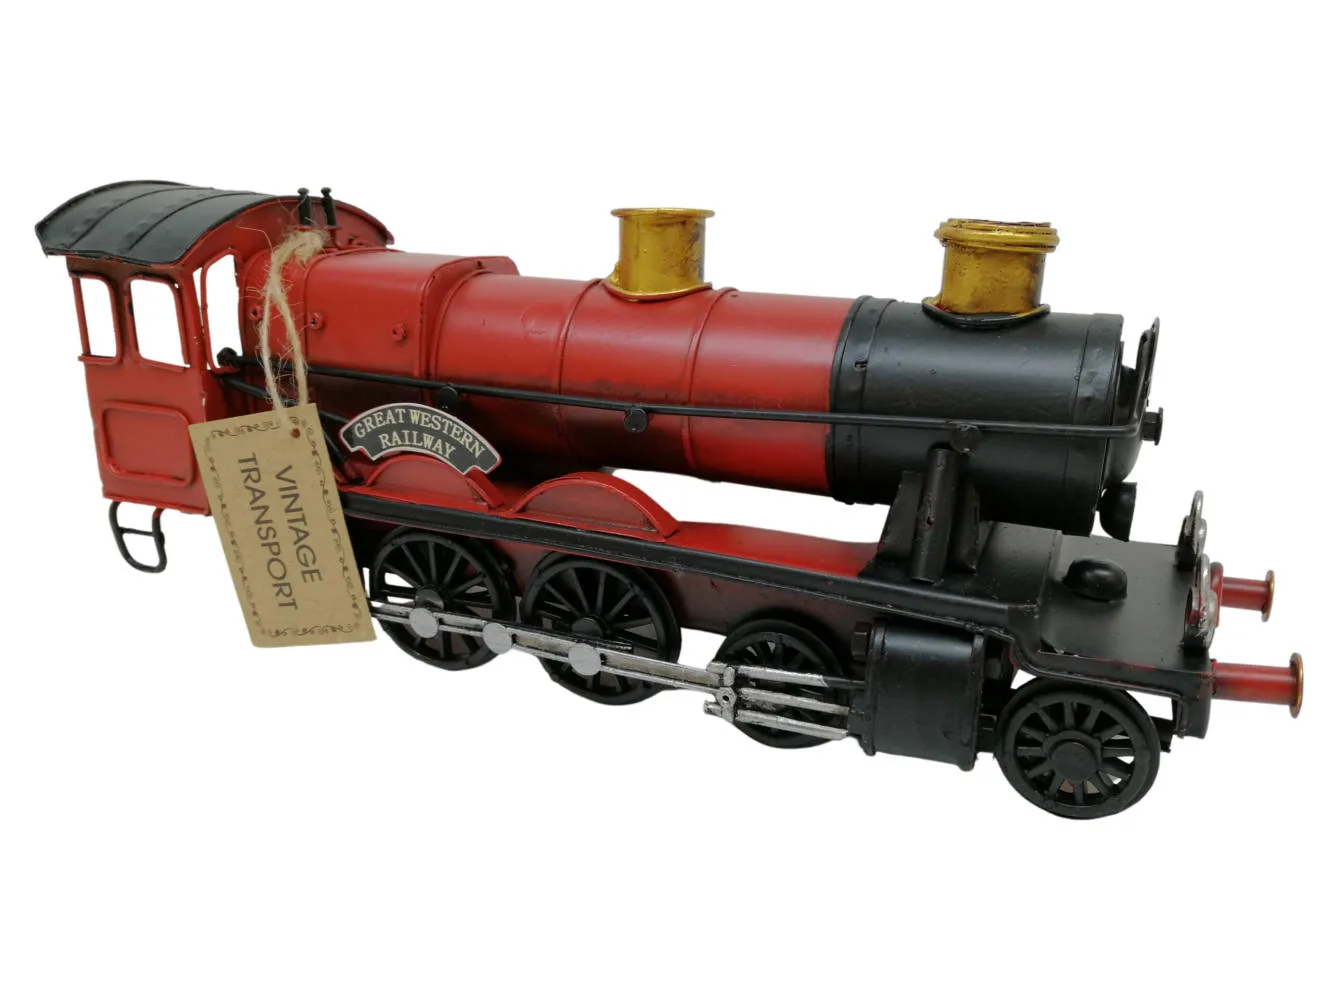 Vintage Great Western Railway Red Train Tinplate Style Metal Ornament Figurines Medium (15-29cm) 2